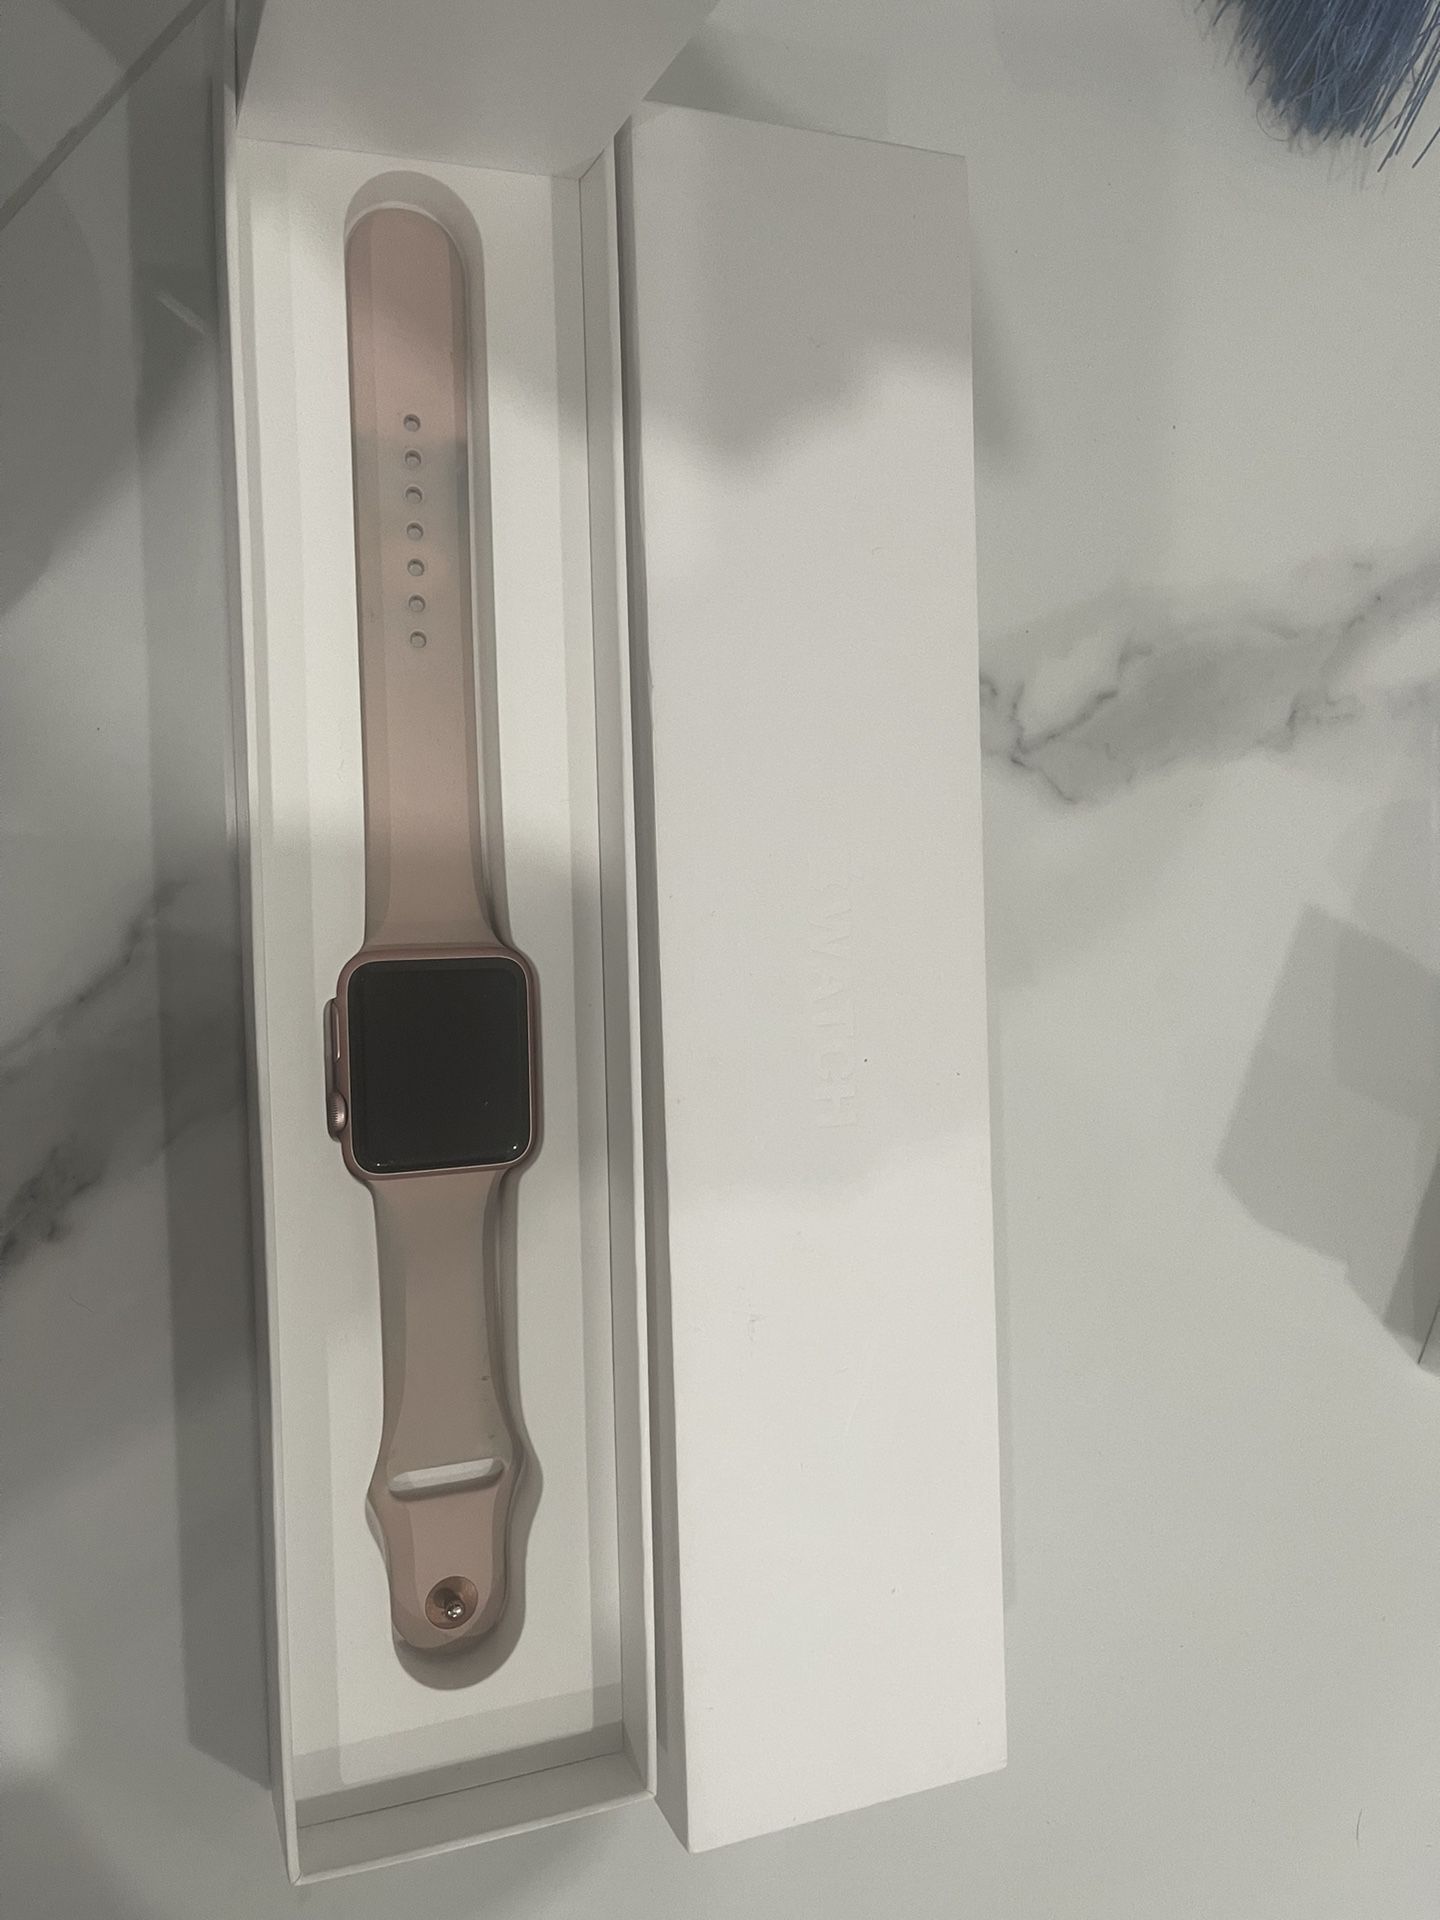 Series 1 42mm Apple Watch